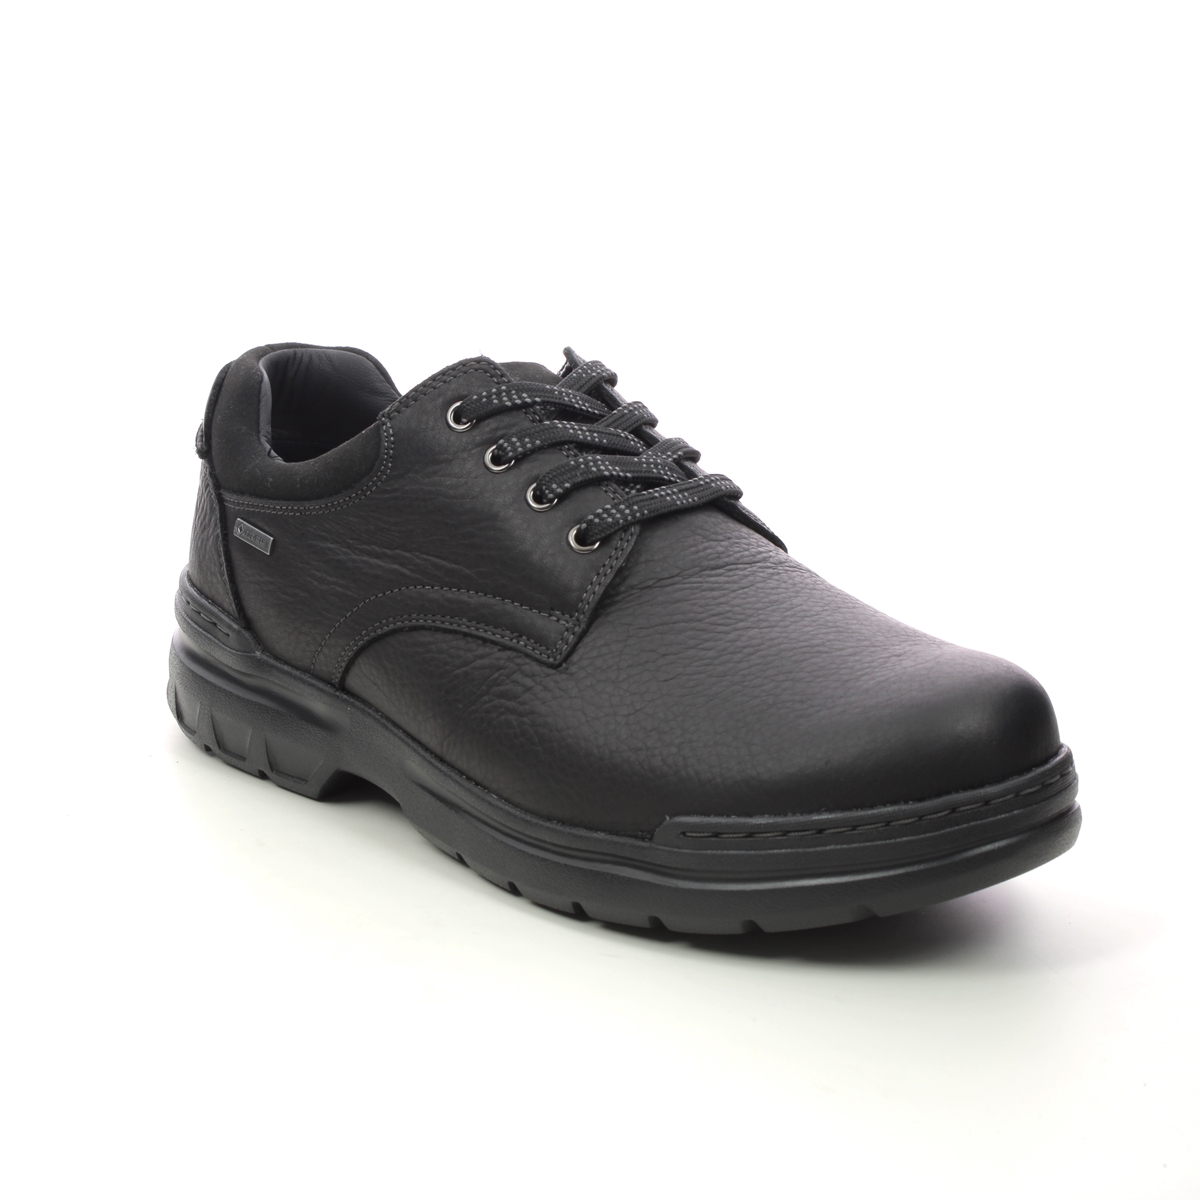 Clarks Rockie Gtx H Fit Black leather shoes